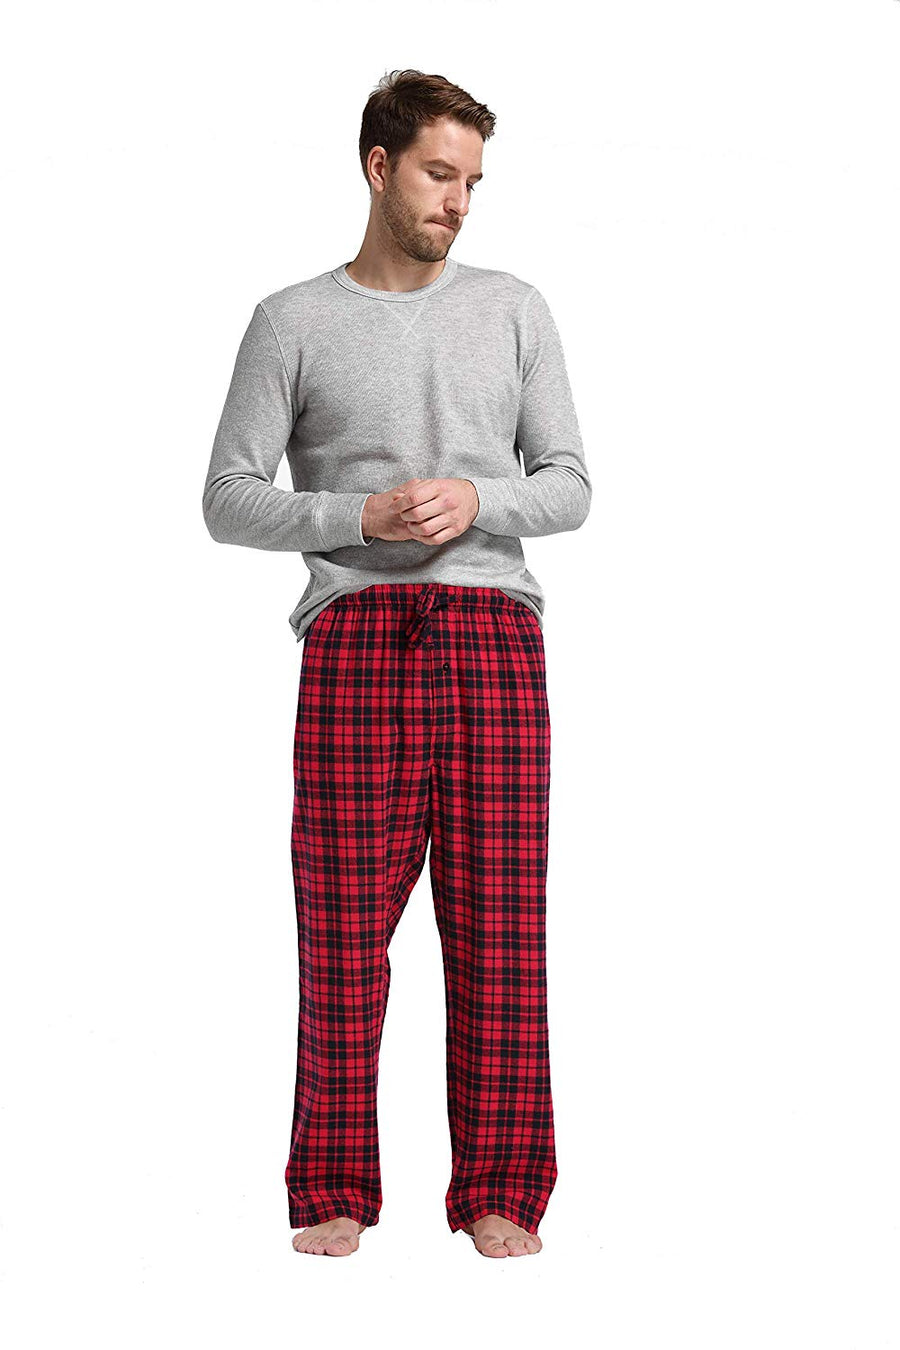 CYZ Men's Holiday Pajama Gift Set Cotton Rib Shirt with Flannel Pajama Pants